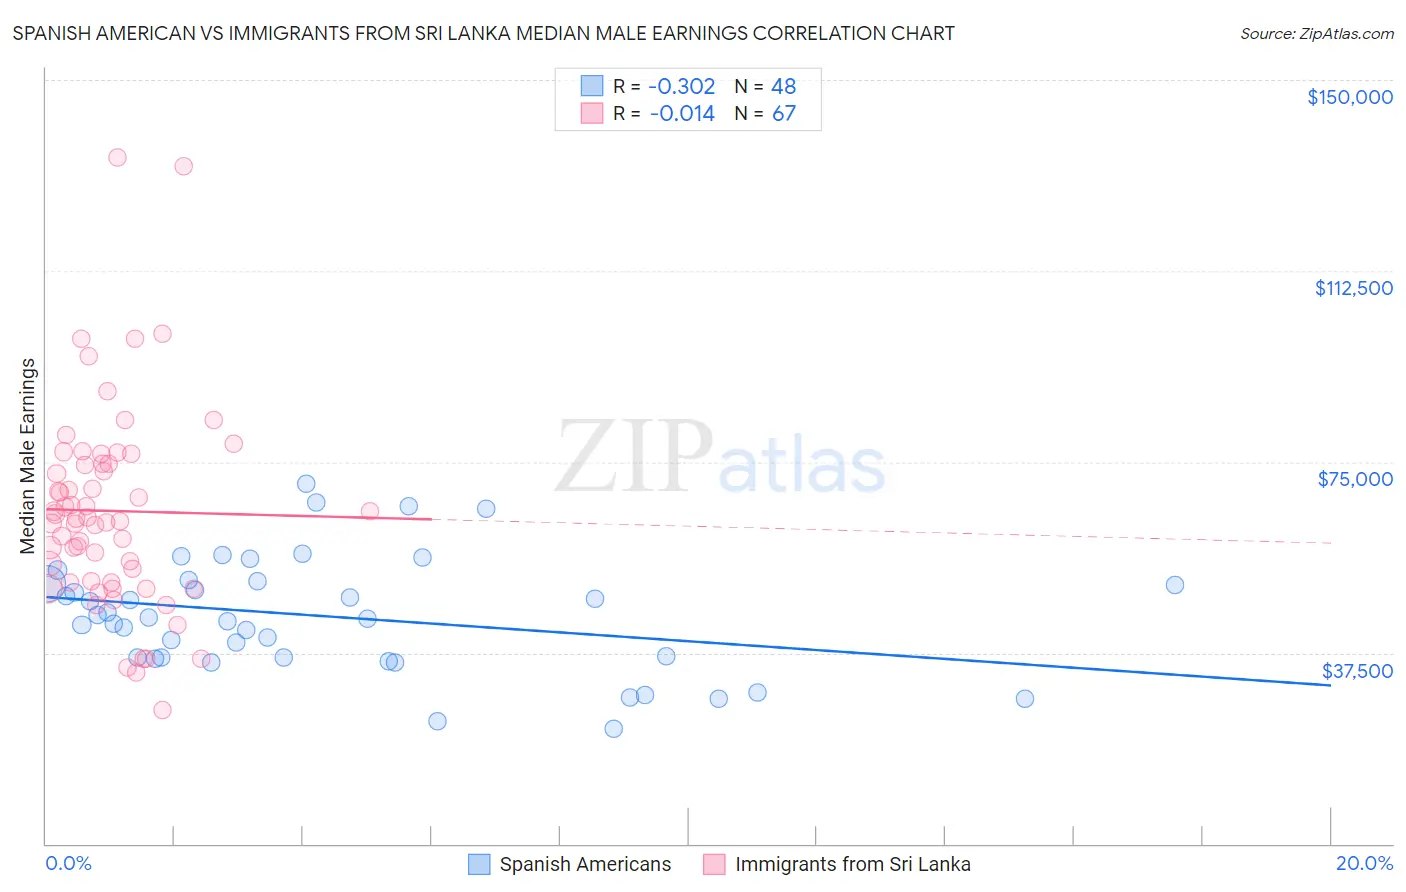 Spanish American vs Immigrants from Sri Lanka Median Male Earnings